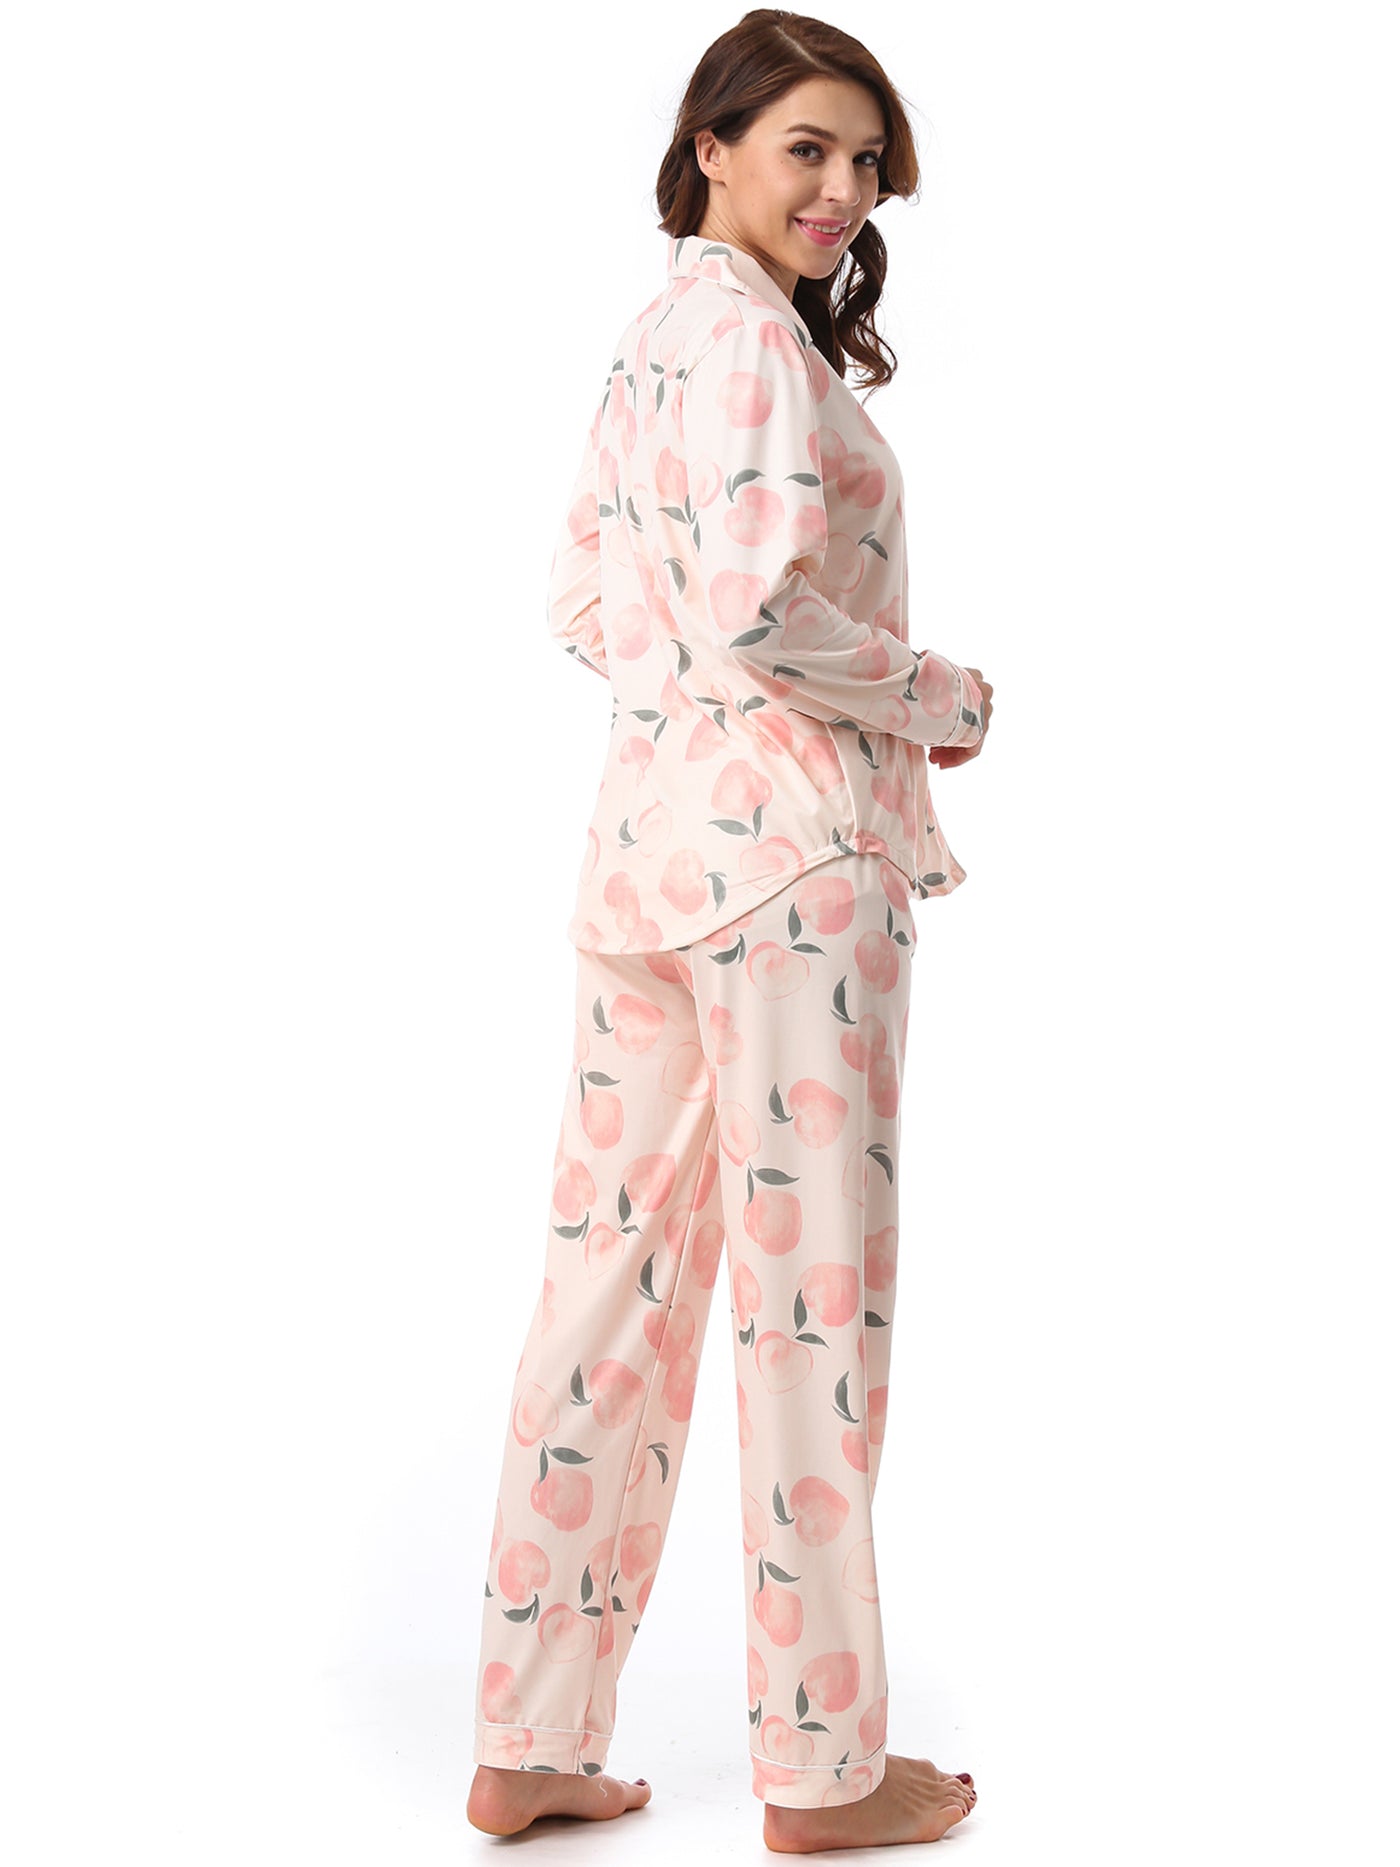 Bublédon Women's Sleepwear Cute Soft Long Sleeve Pajama Set